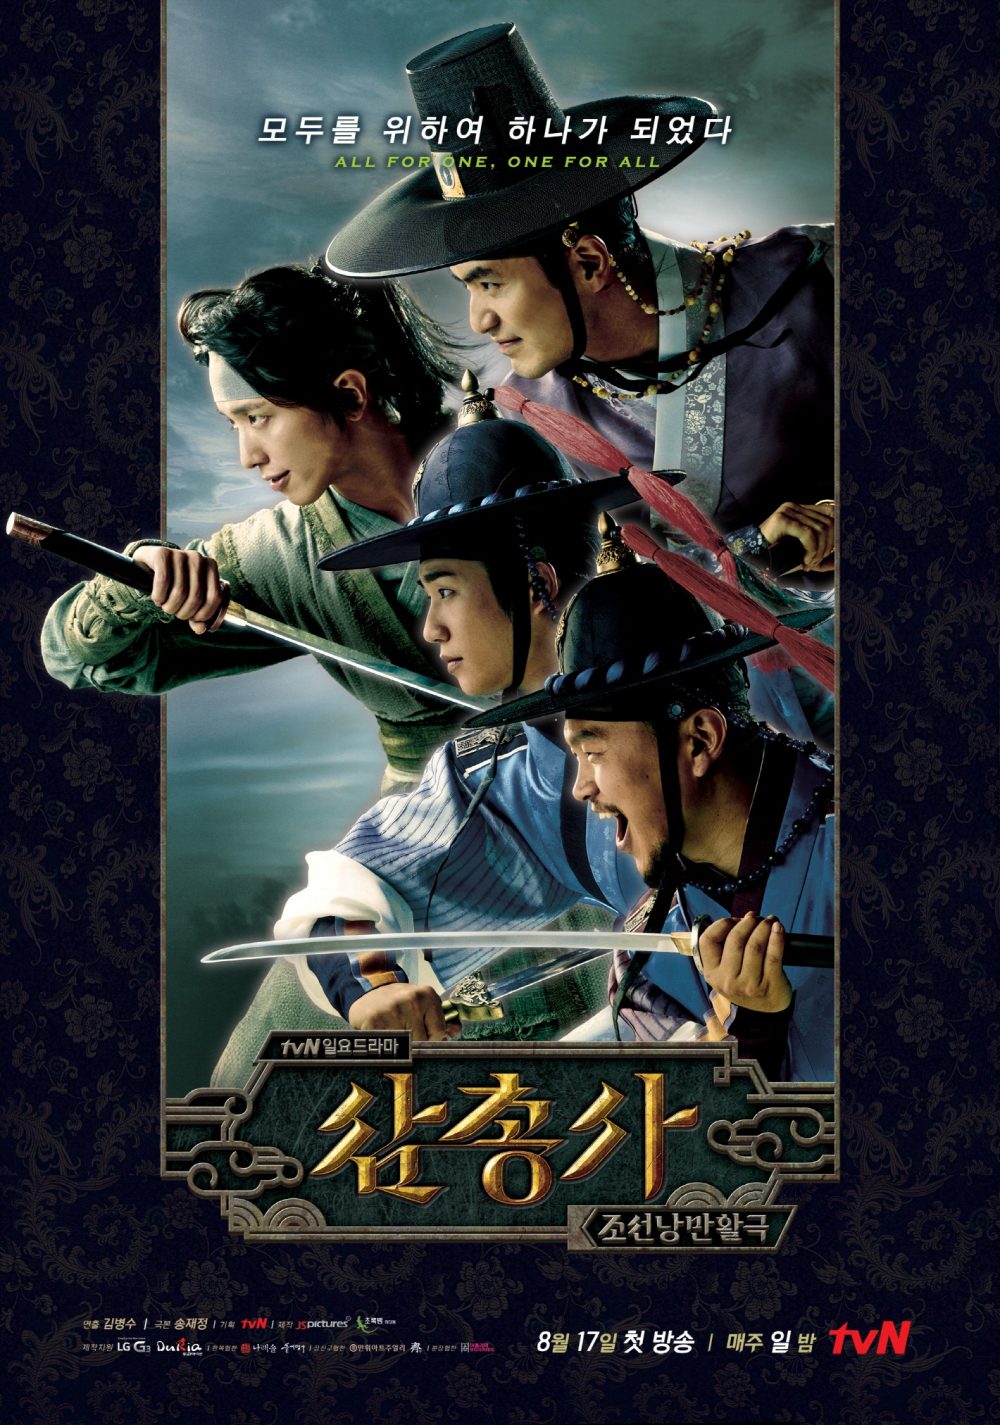 phim hay nhat cua lee jin wook 3 1 e1640589920881 - 10 bộ phim hấp dẫn nhất của diễn viên Jung Hae In